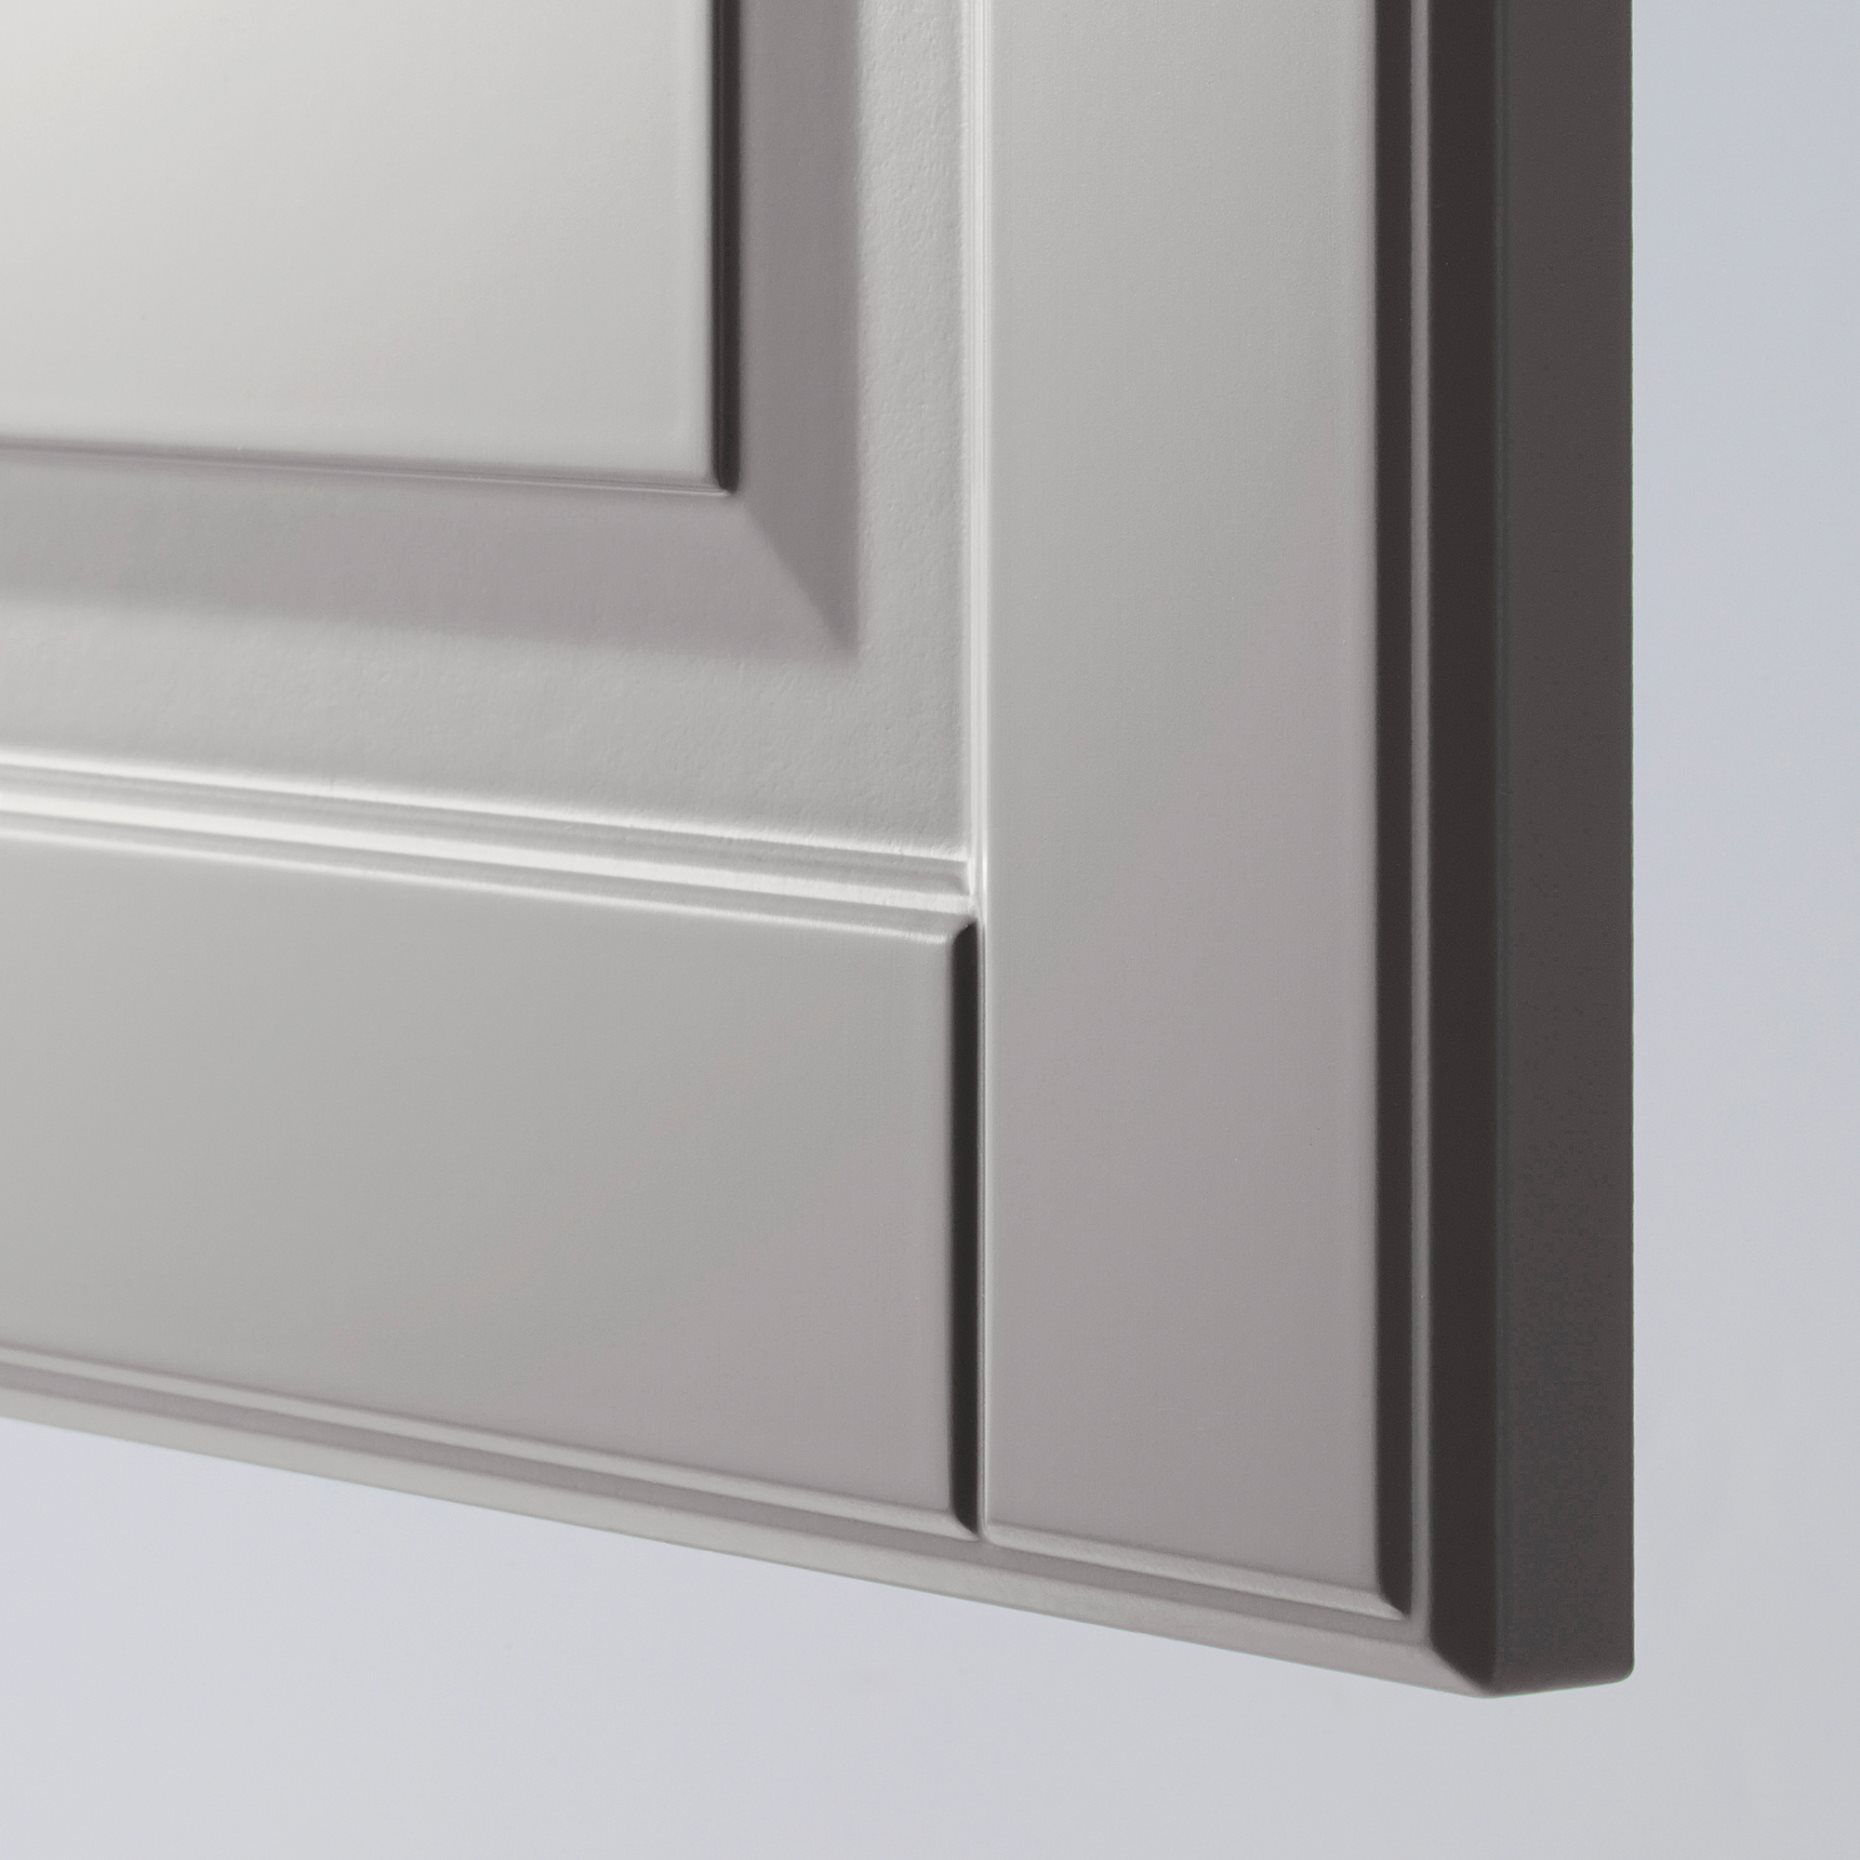 METOD/MAXIMERA, ψηλό ντουλάπι για φούρνο πόρτα/2προσόψεις/2 ψηλά συρτάρια, 60x60x220 cm, 994.651.37